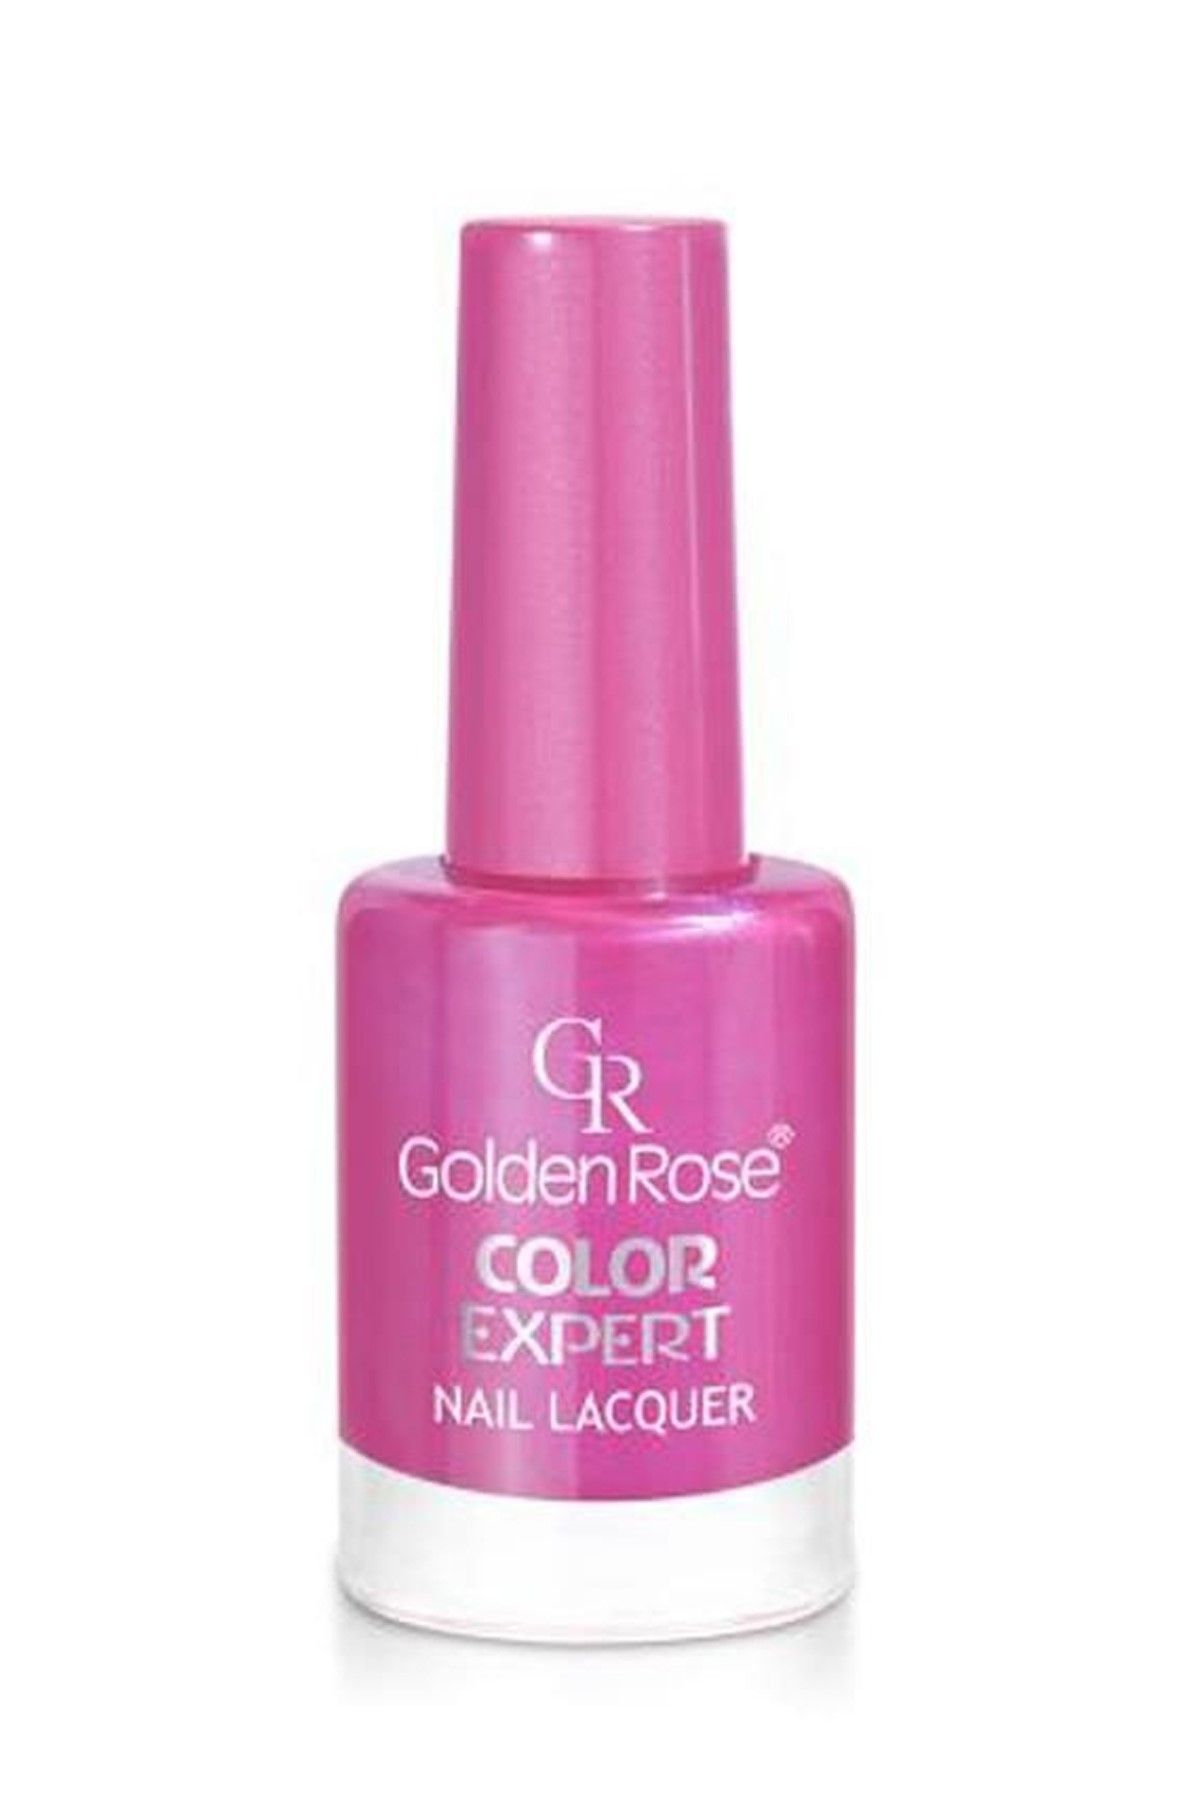 Golden Rose Oje - Color Expert Nail Lacquer No: 27 8691190703271